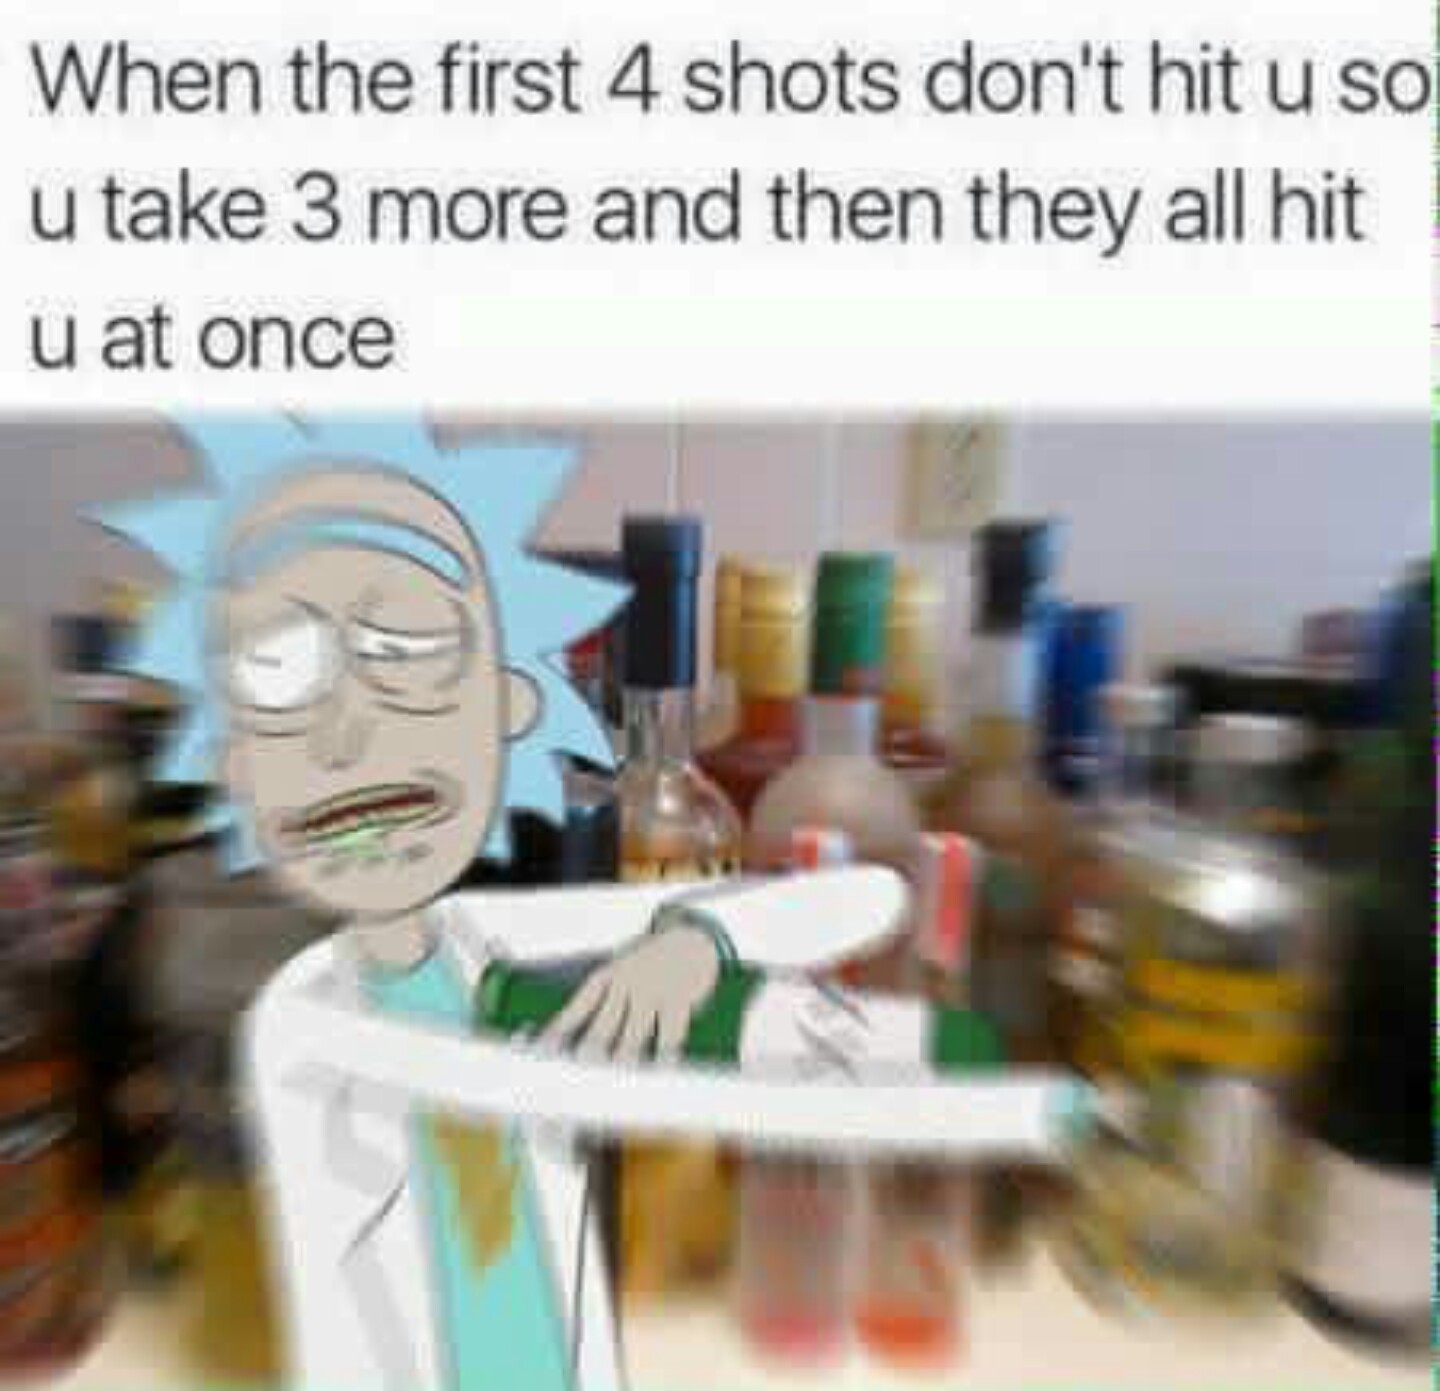 Oh Rick you drunk bastard - meme